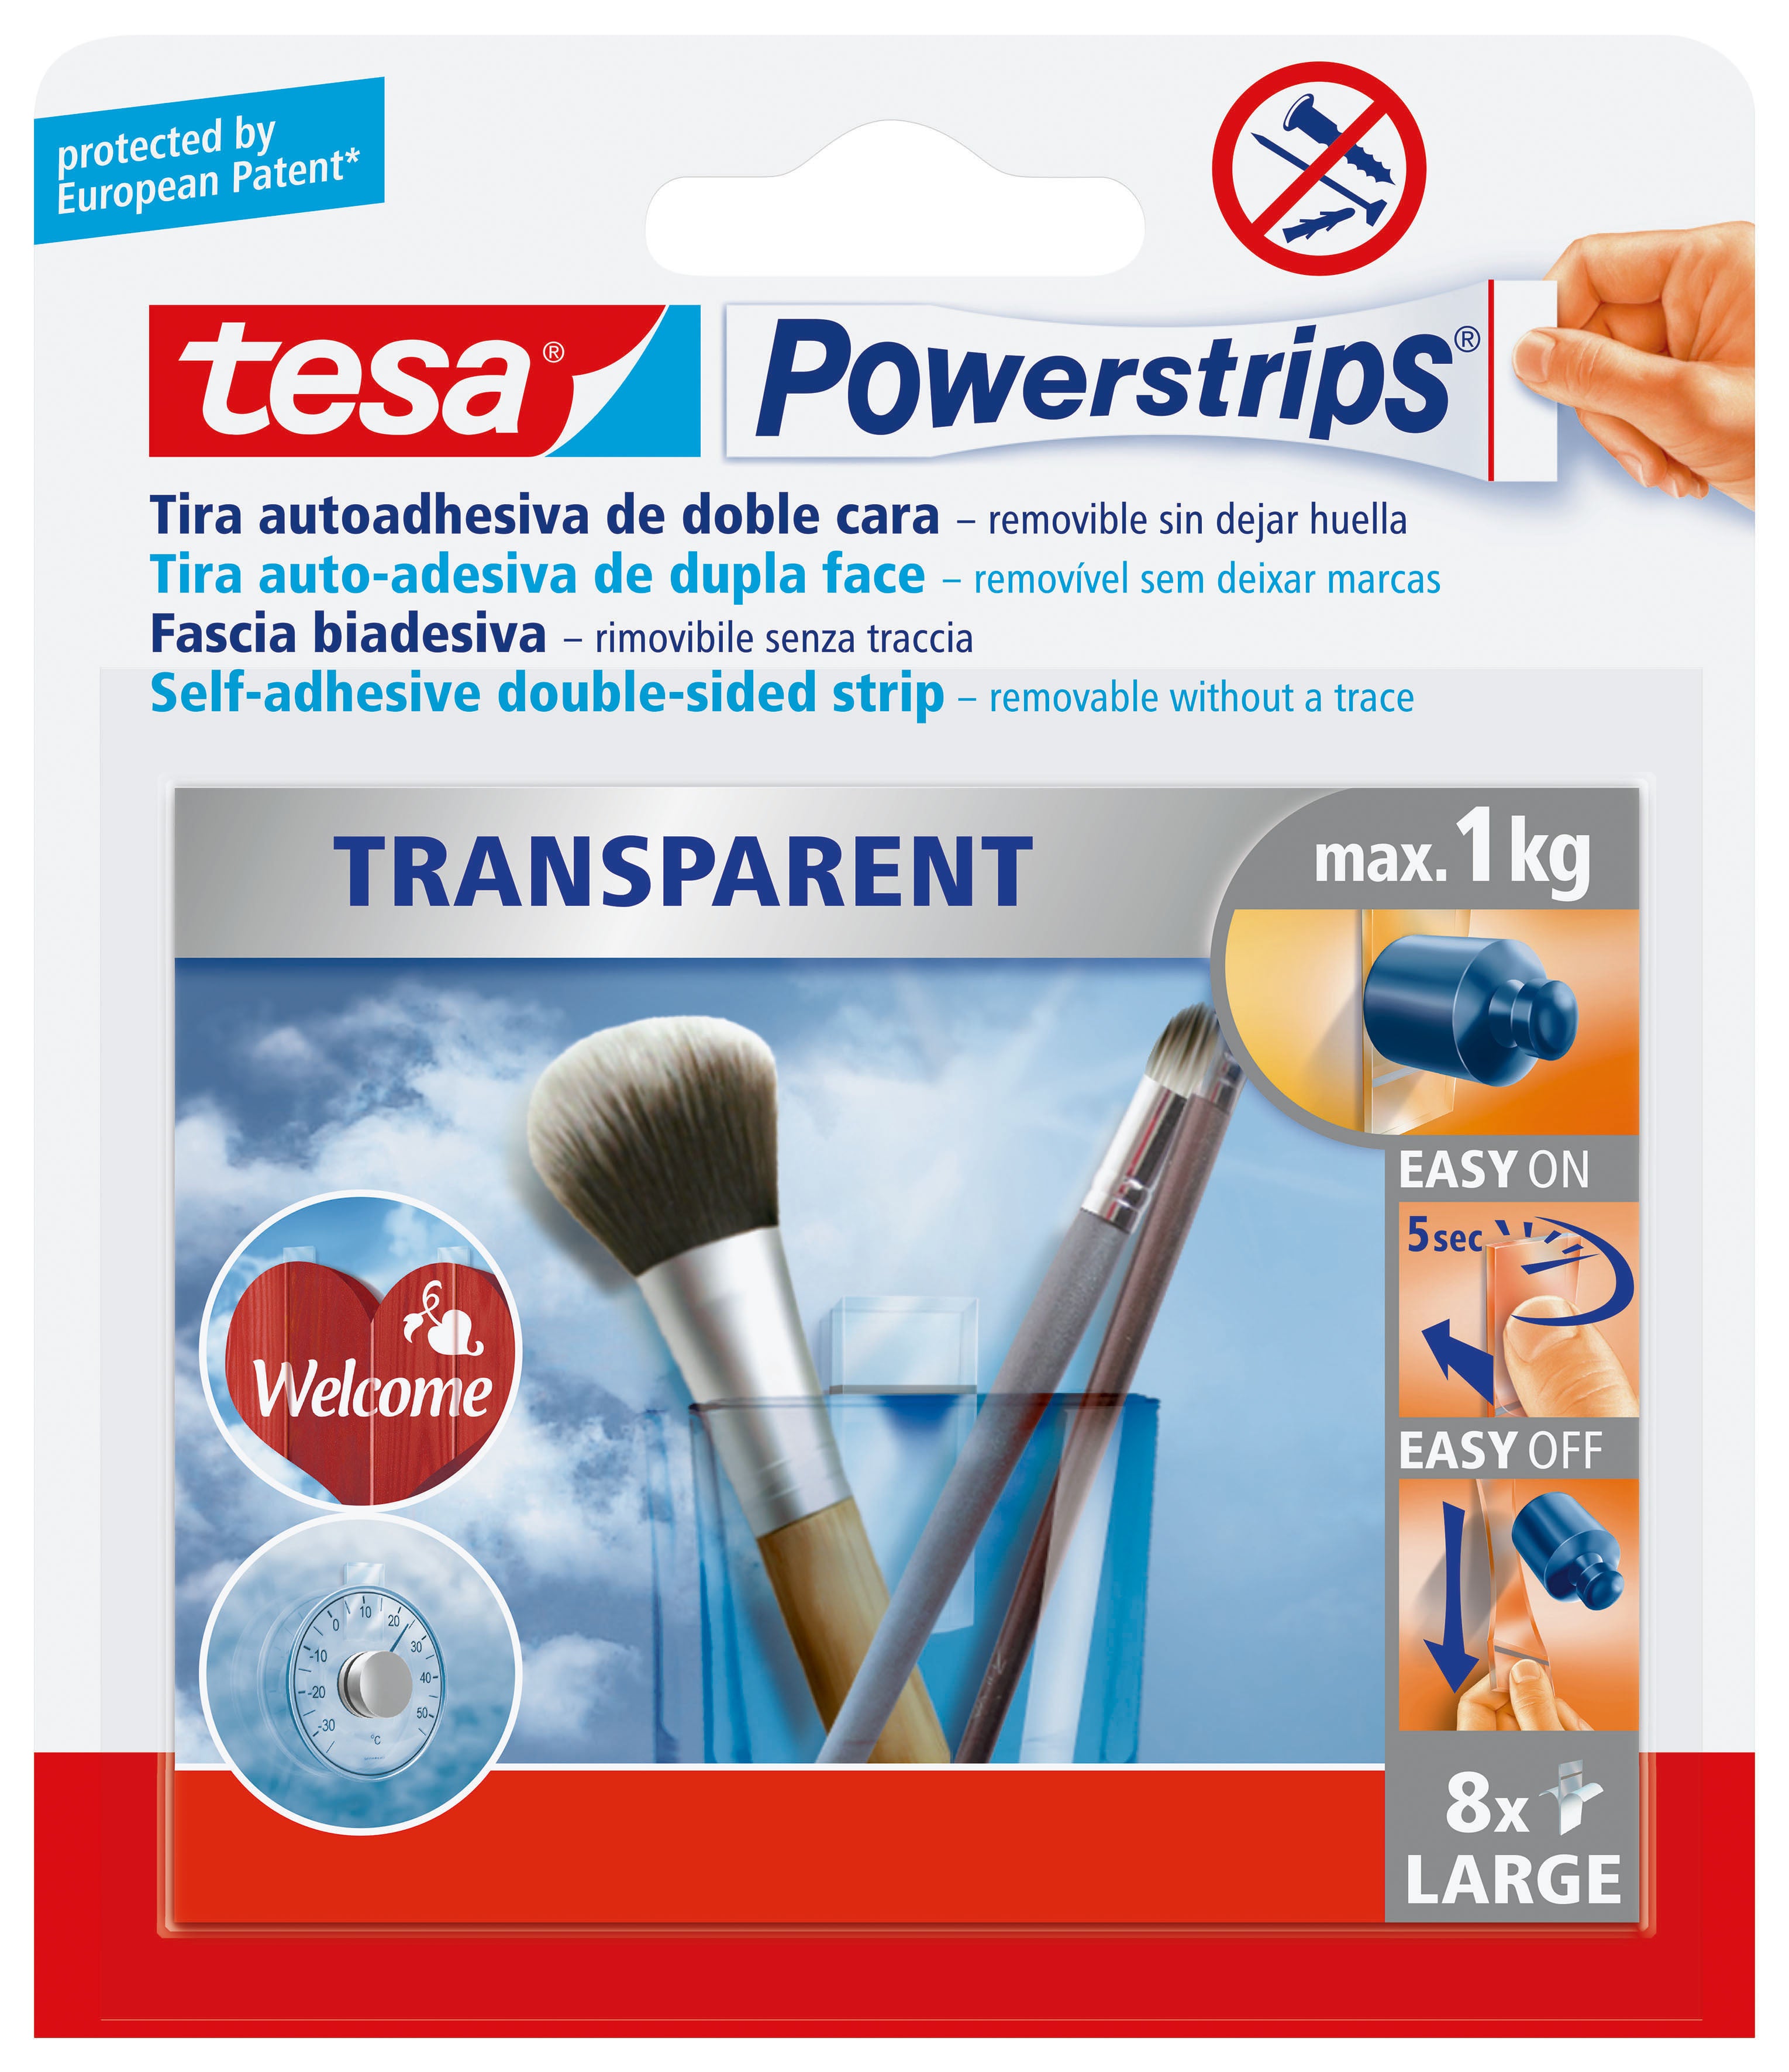 Tesa powerstrips 8 strisce biadesive large